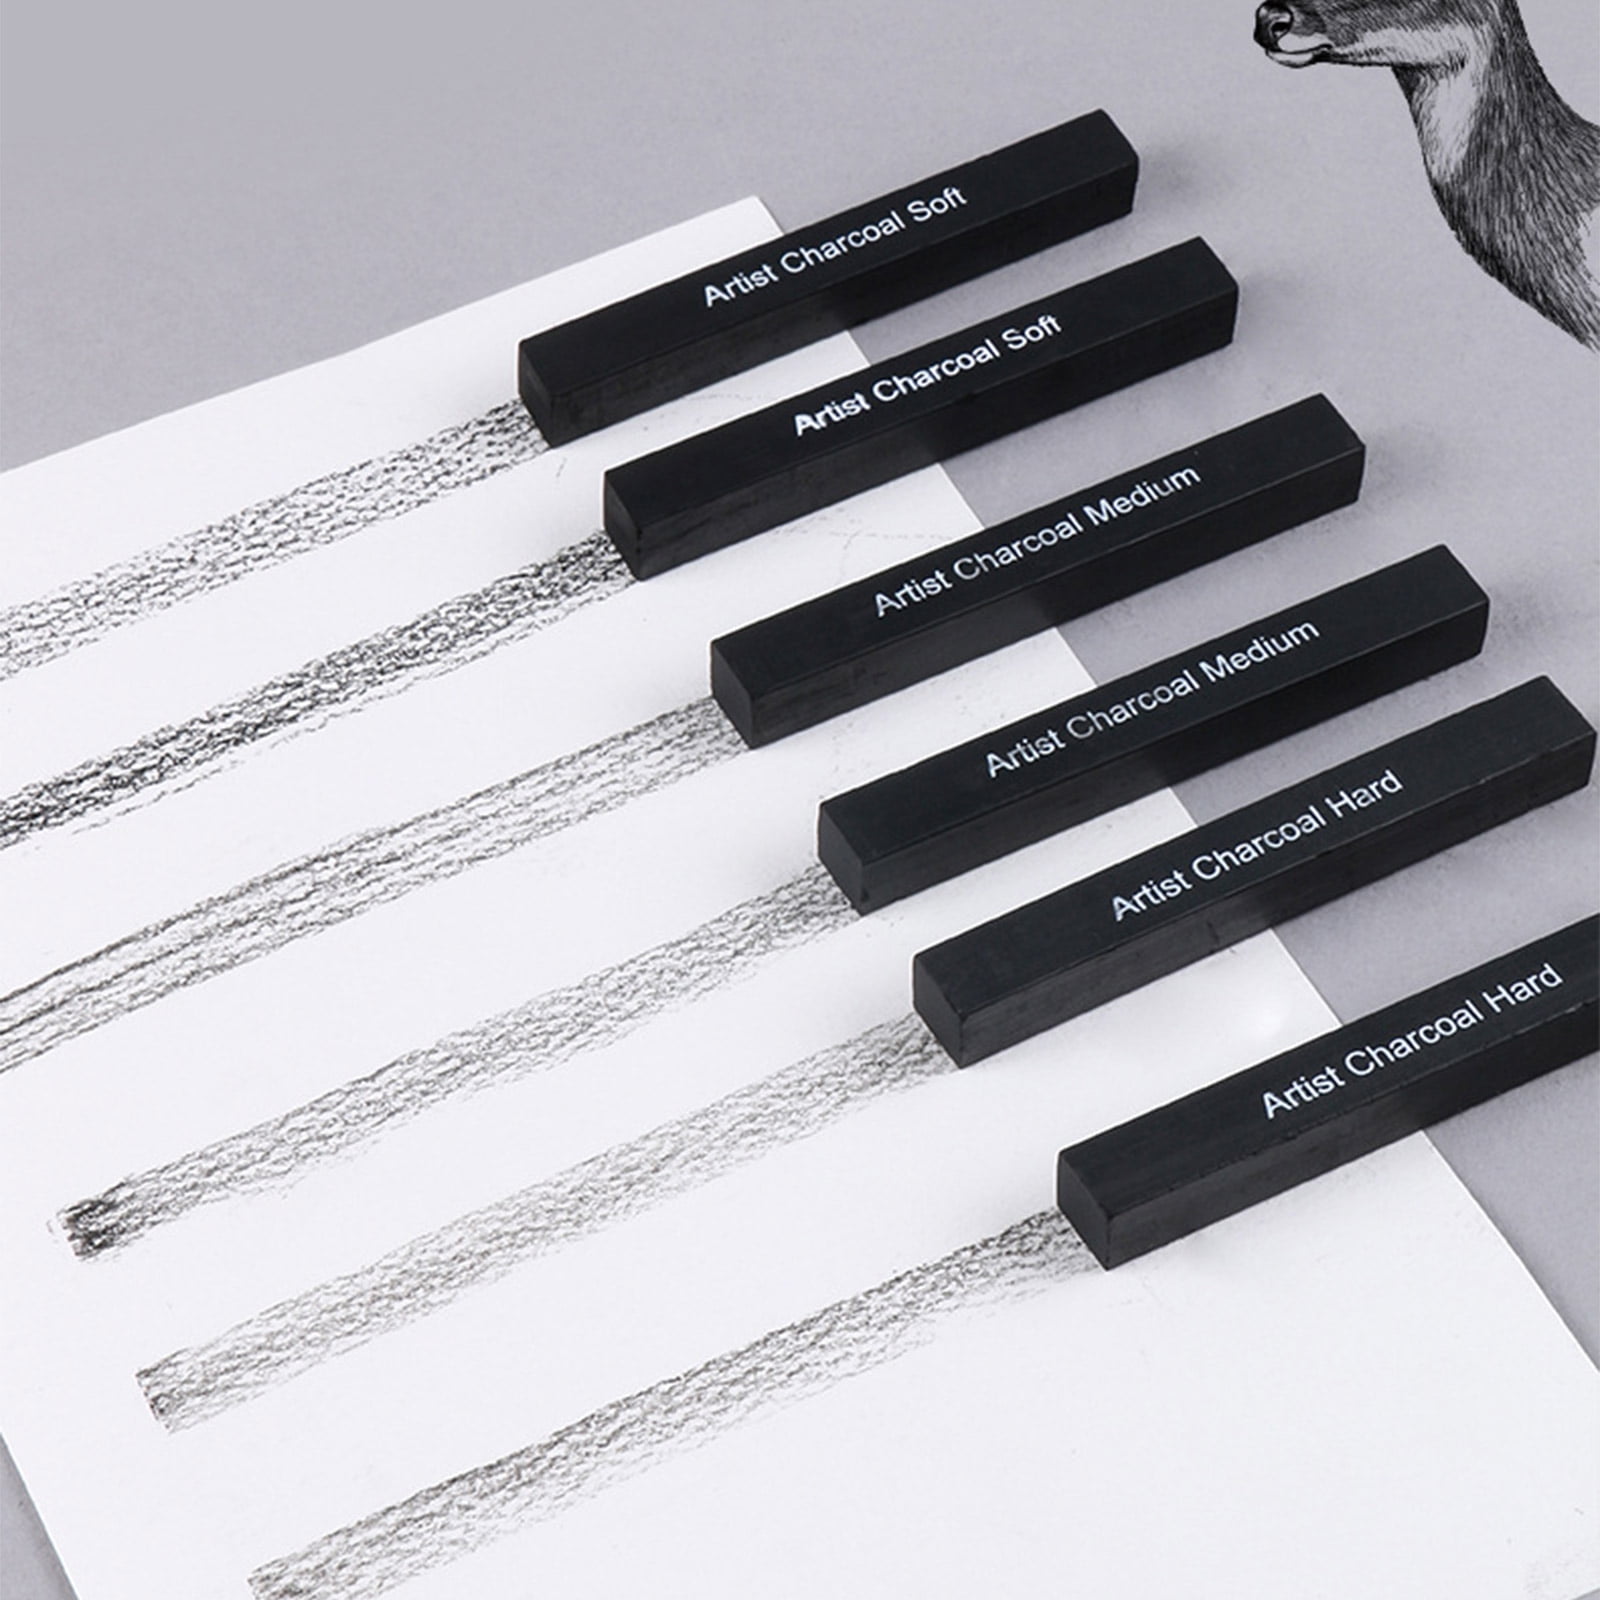 Artist Compressed Charcoal Sticks Square Black Coal Pencils Sketch